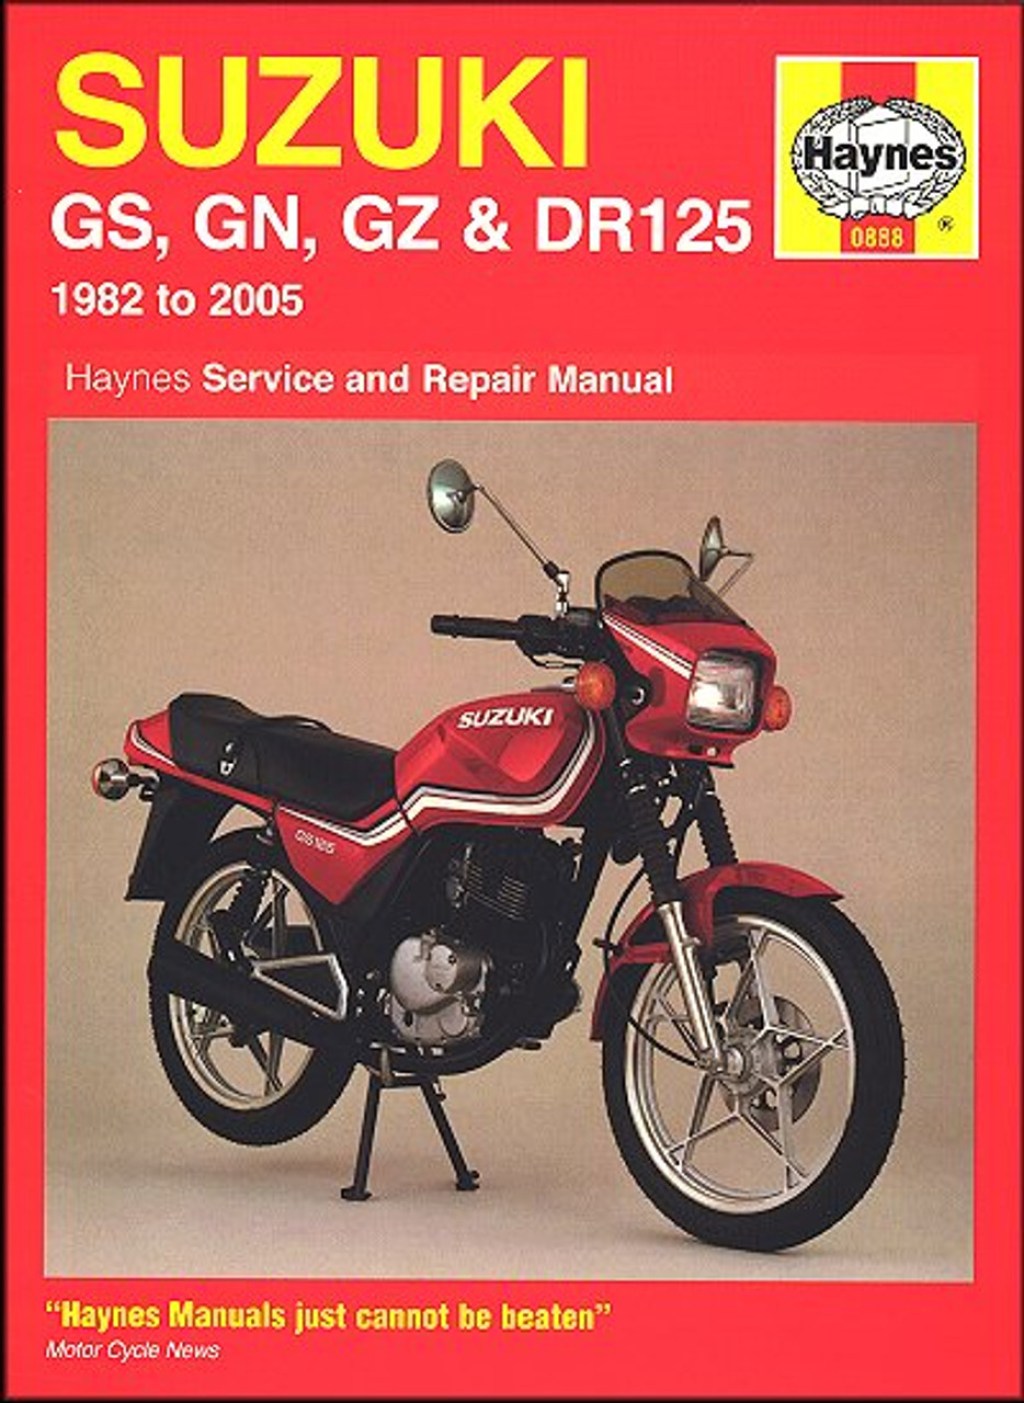 suzuki gz 125 service manual - Suzuki GS, GSES, GN, GZ Marauder, DRS Repair Manual -